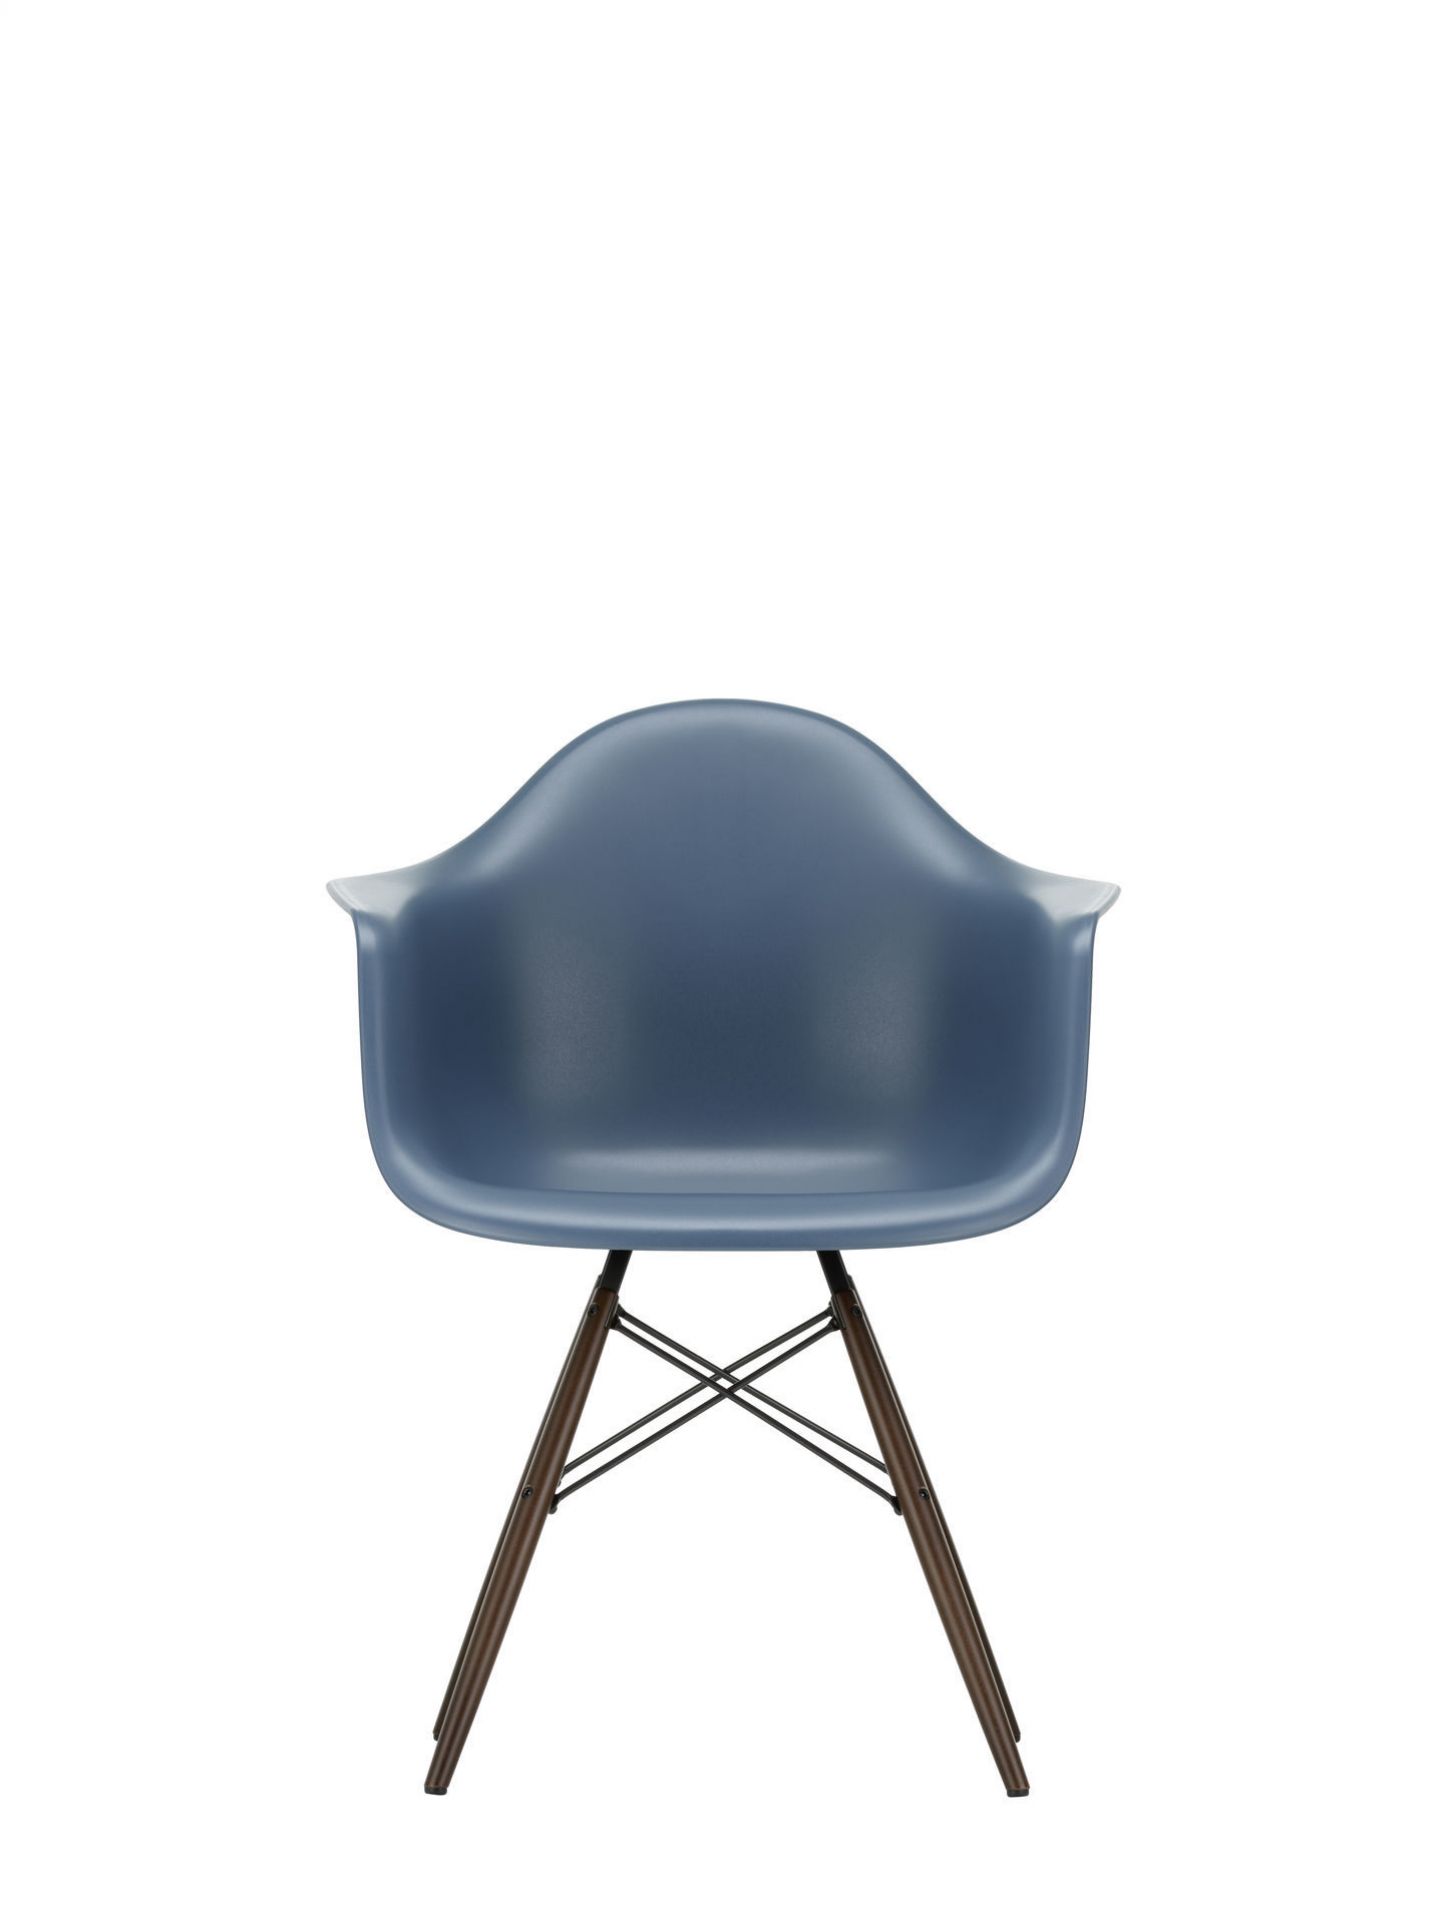 Eames Plastic Arm Chair DAW Stuhl Vitra Ahorn schwarz - Kieselstein